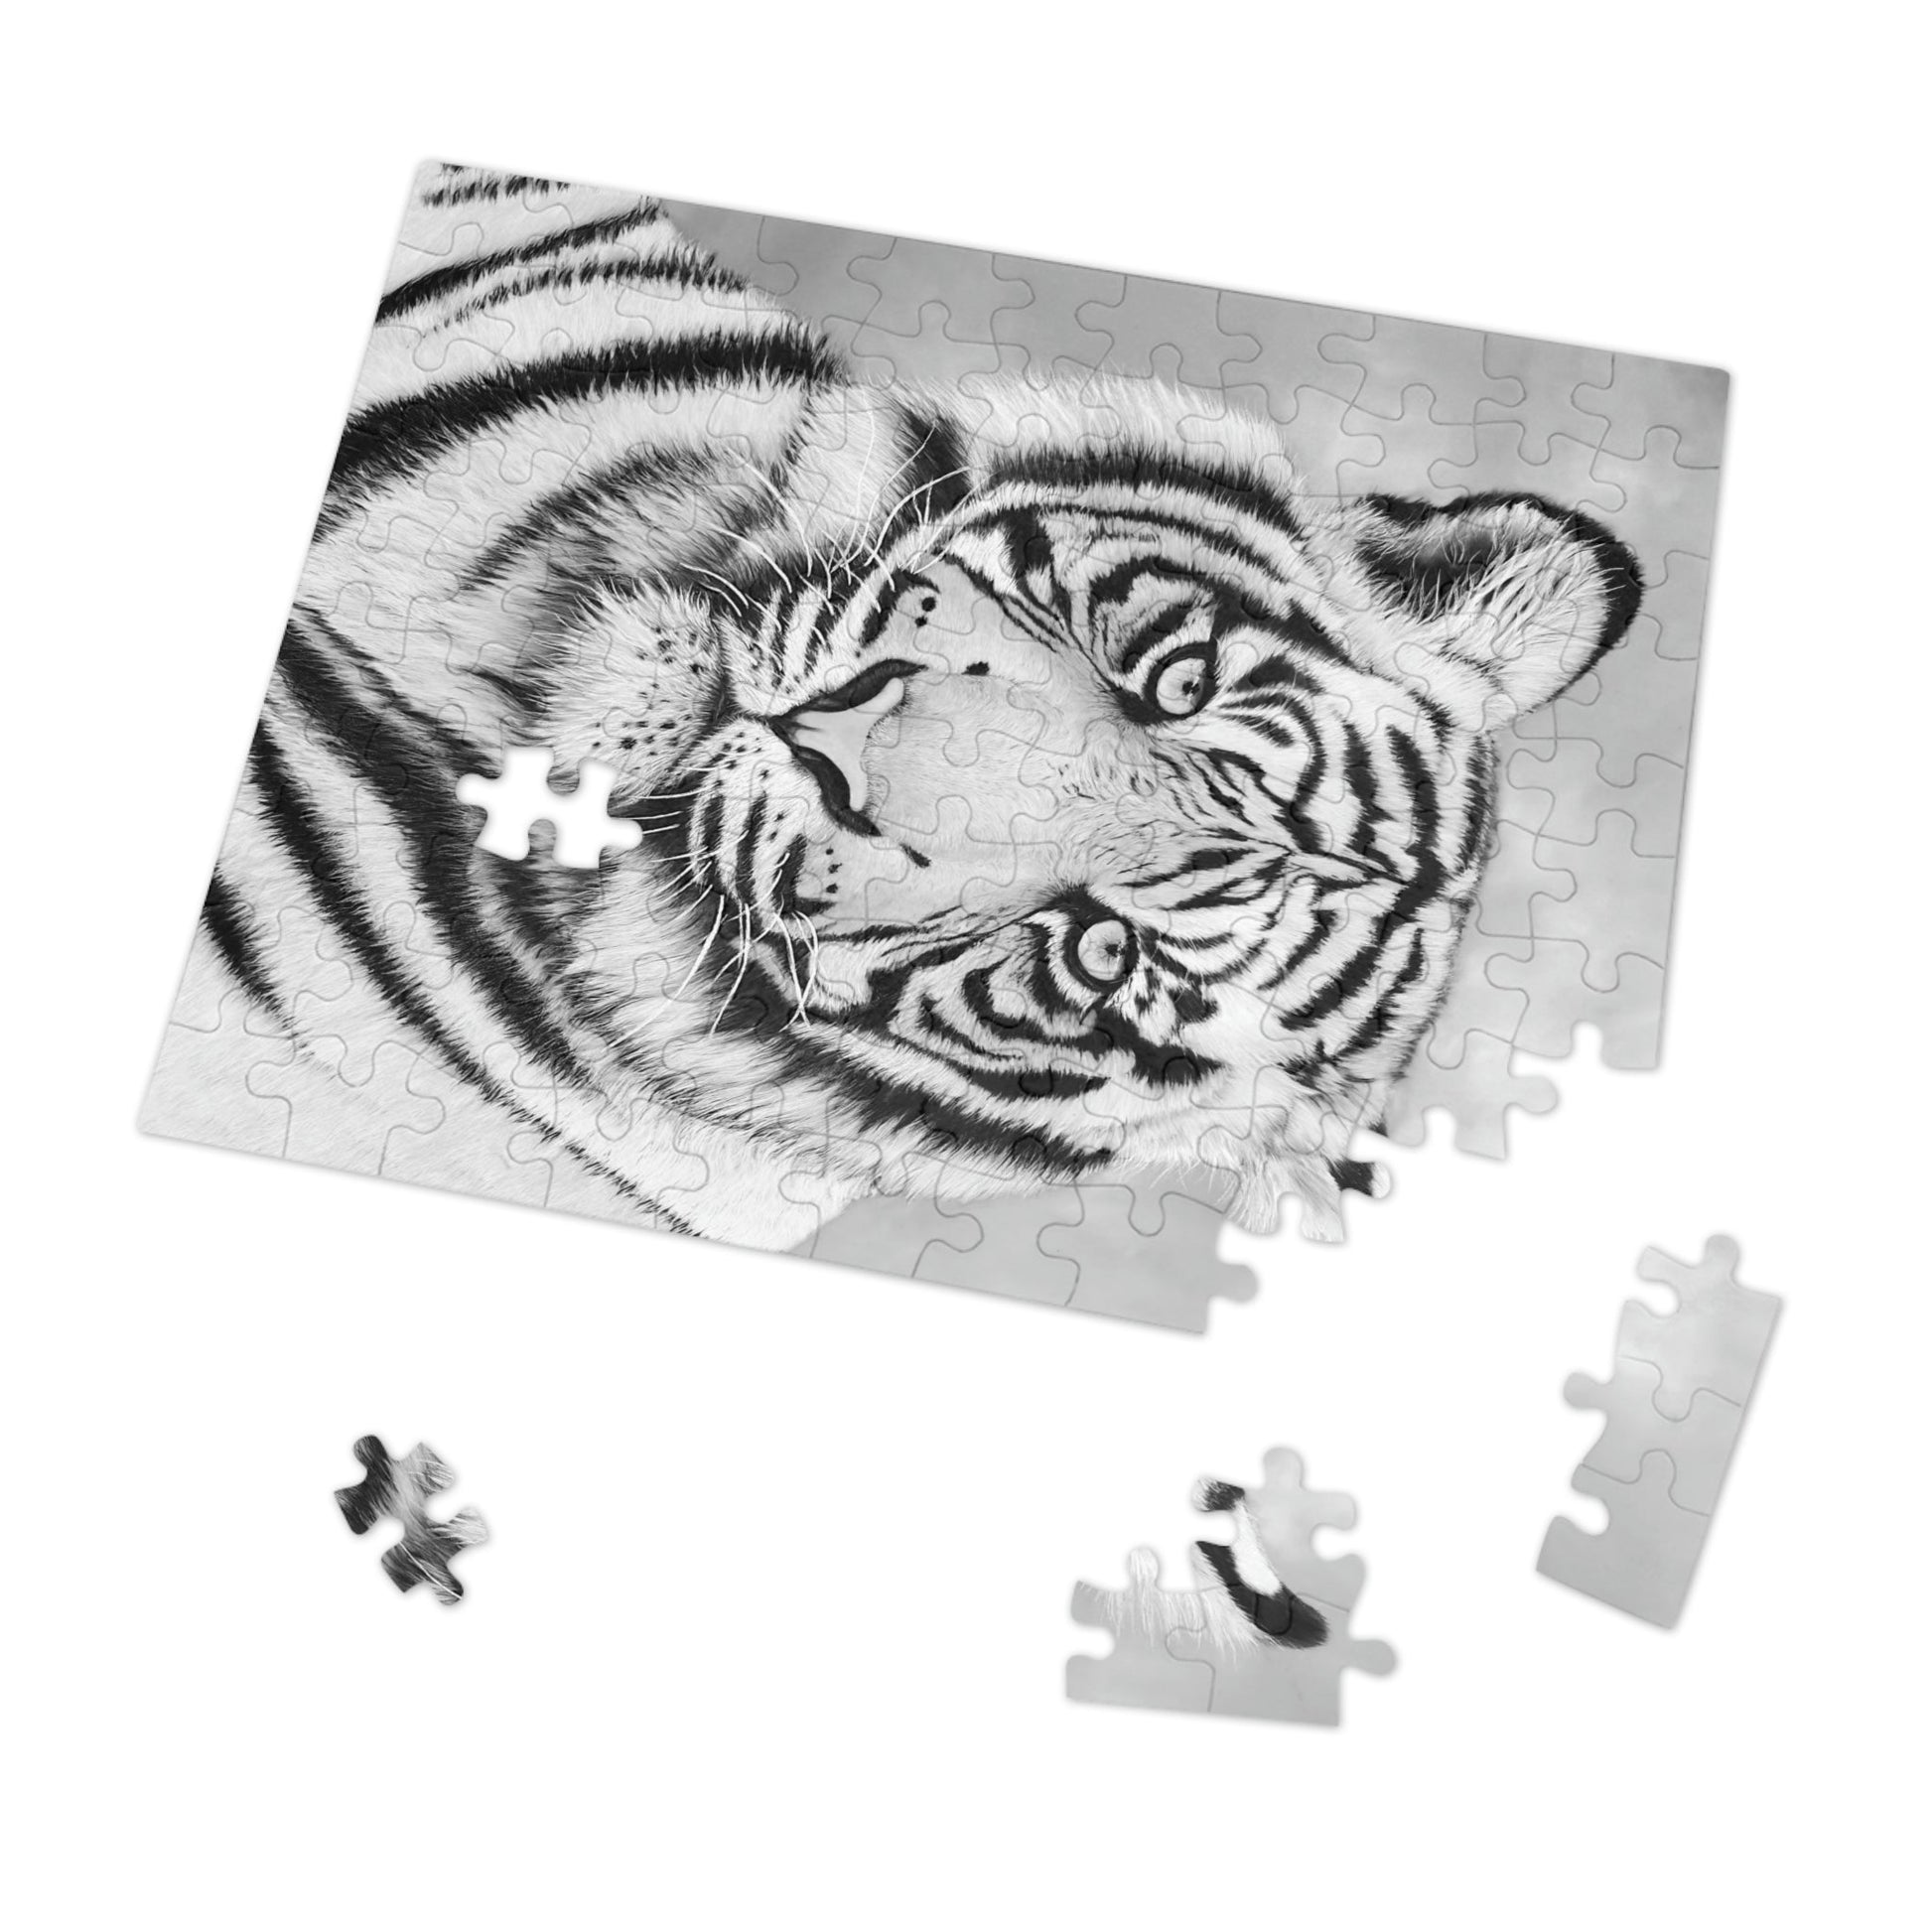 Jigsaw Puzzle - "MONOCHROME TIGER"